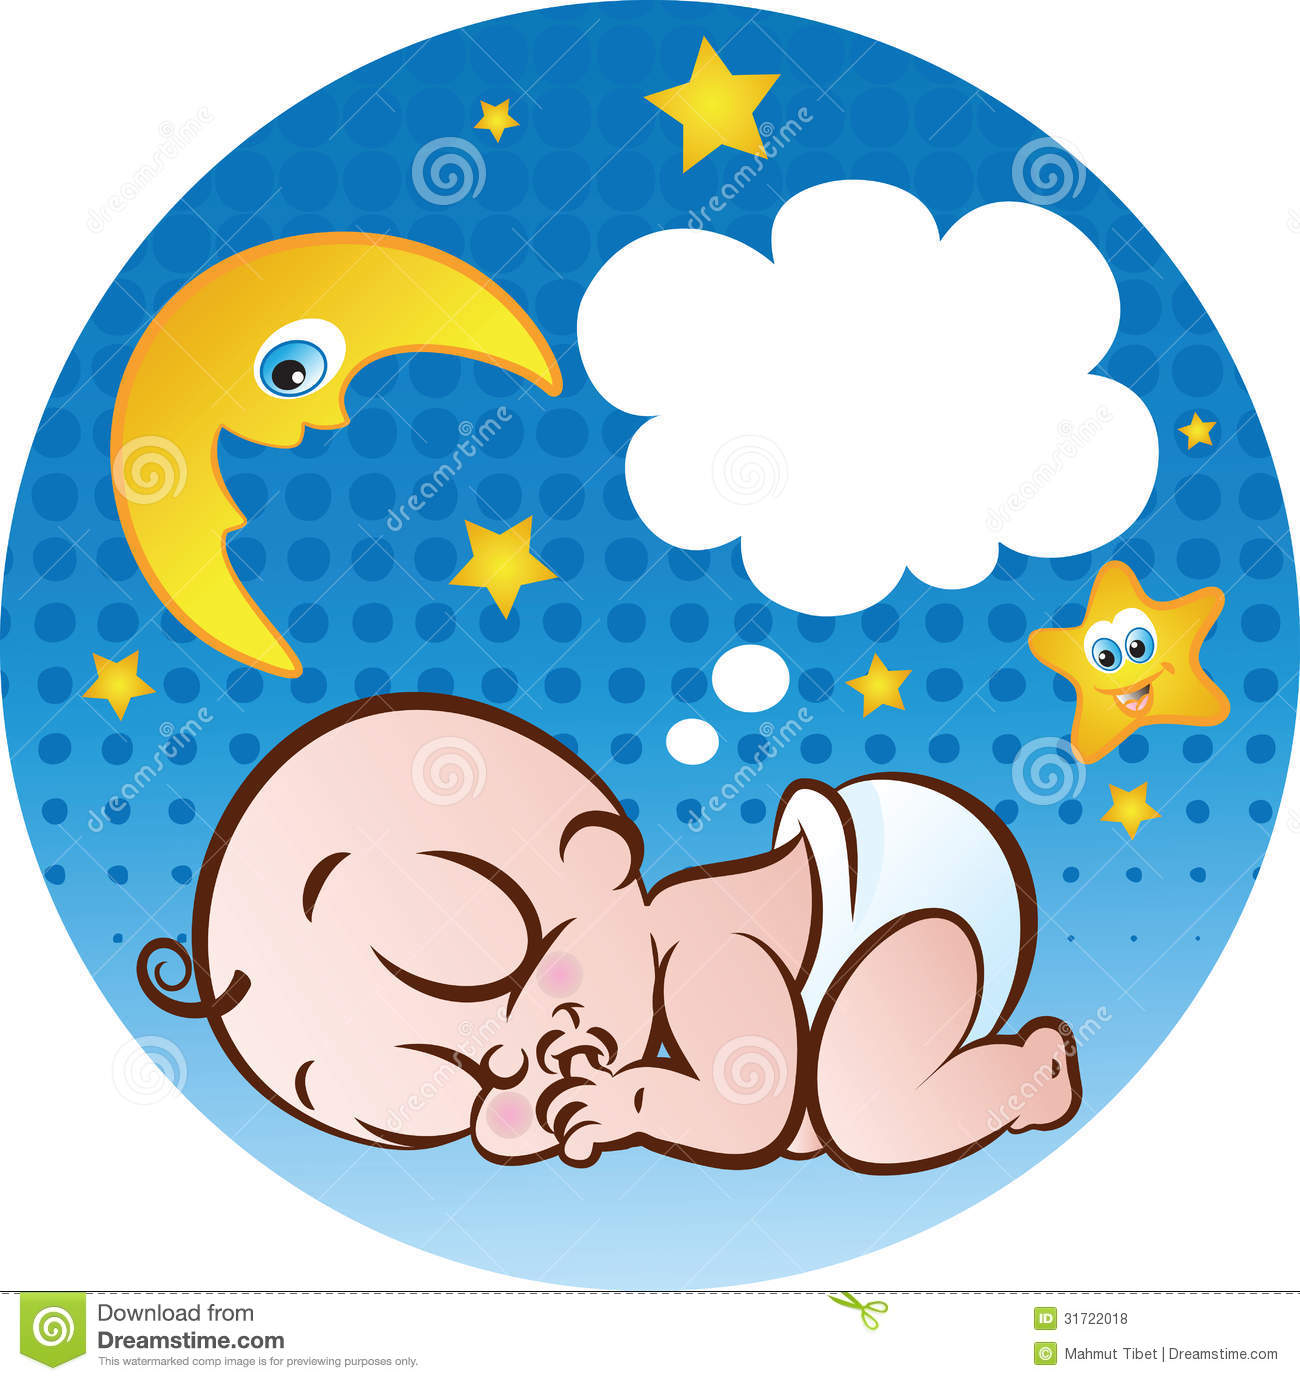 838ff83265ef9423803ce3edb0609 - Sleeping Baby Clip Art